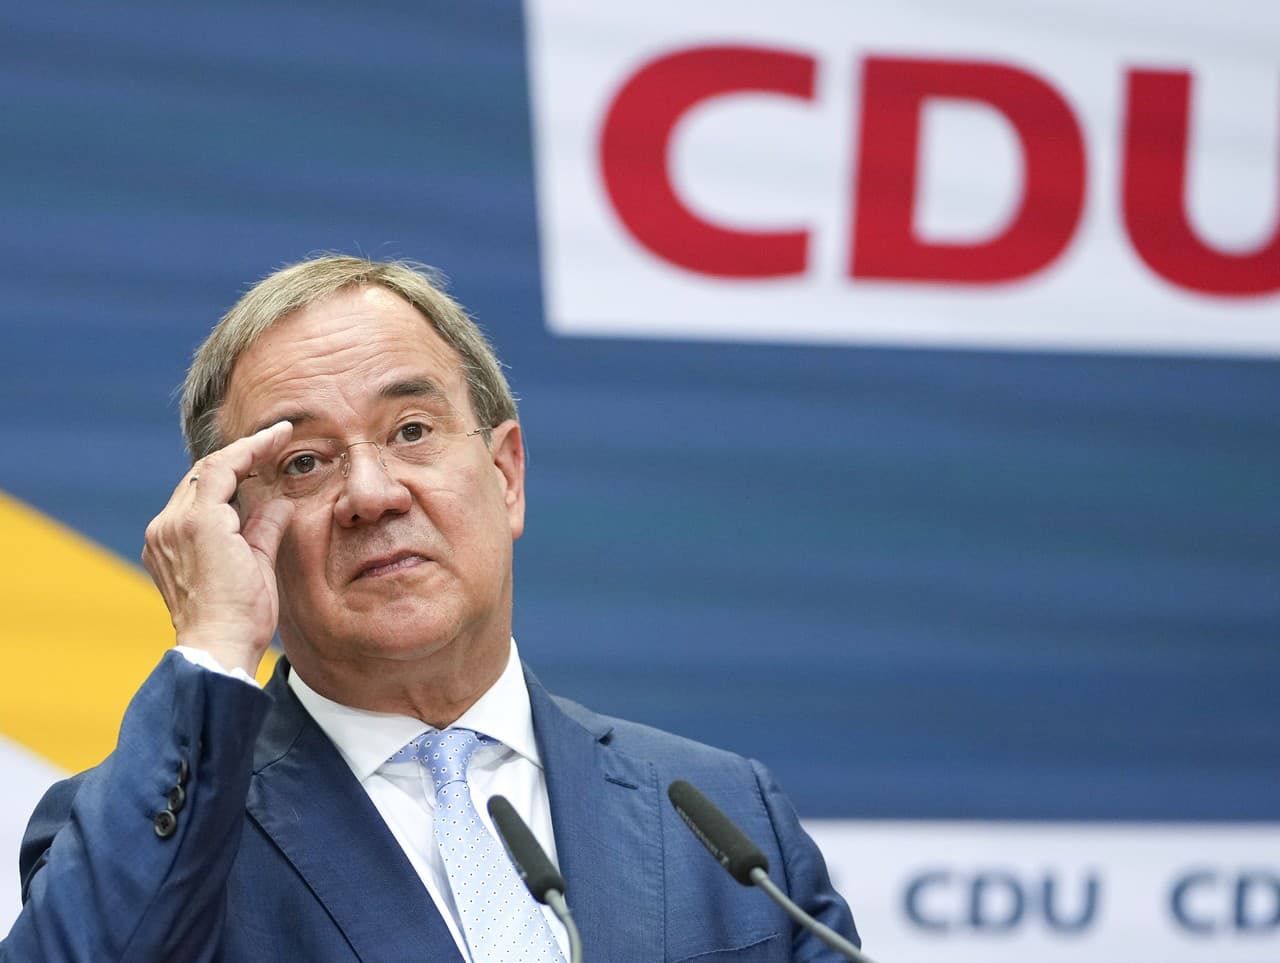 Predseda strany CDU Armin Laschet